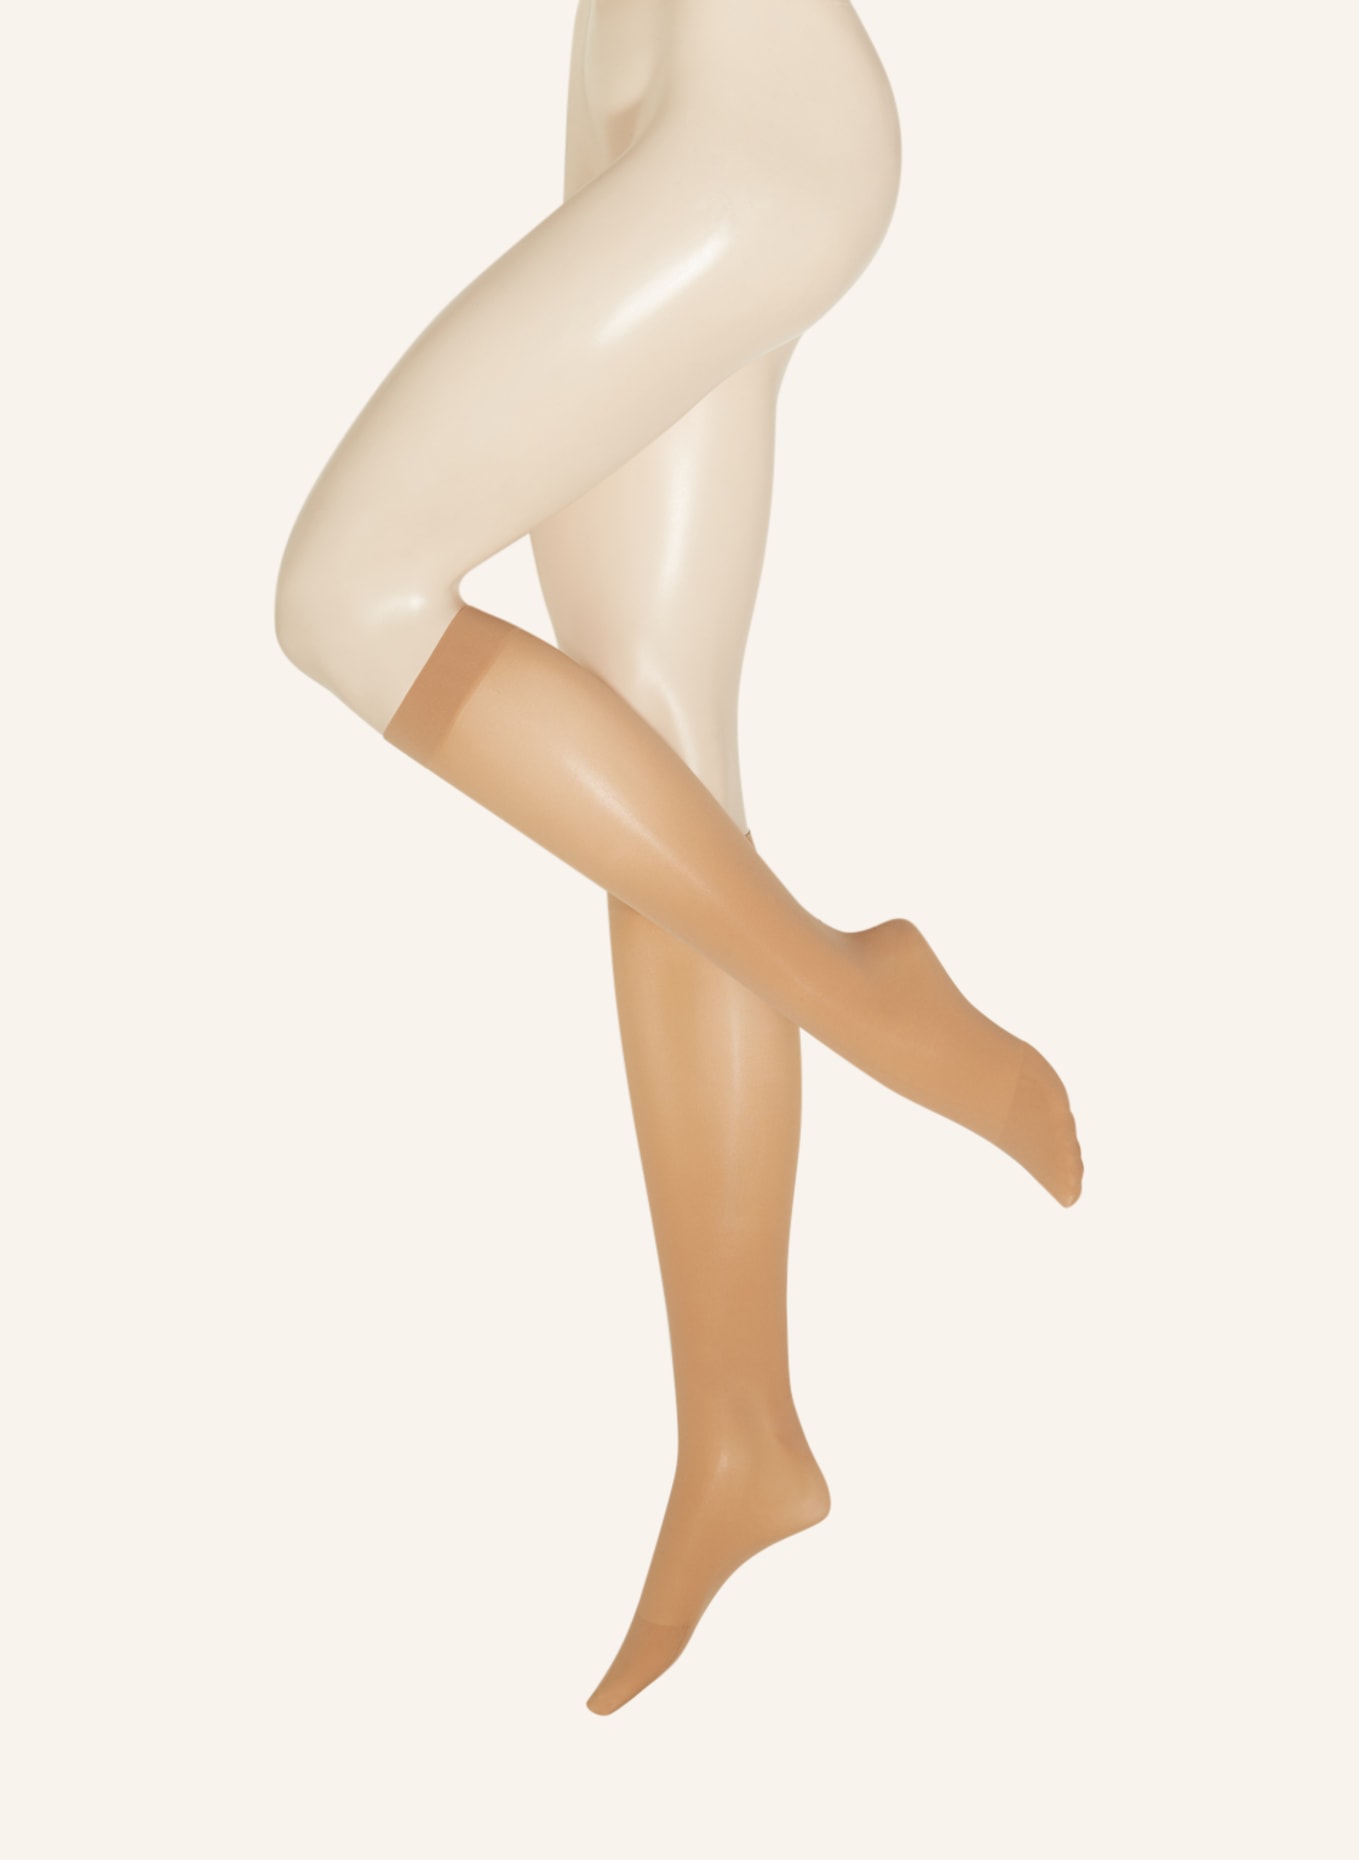 ITEM m6 Fine knee high stockings KNEE-HIGH TRANSLUCENT 30 CONSCIOUS, Color: 255 powder (Image 1)